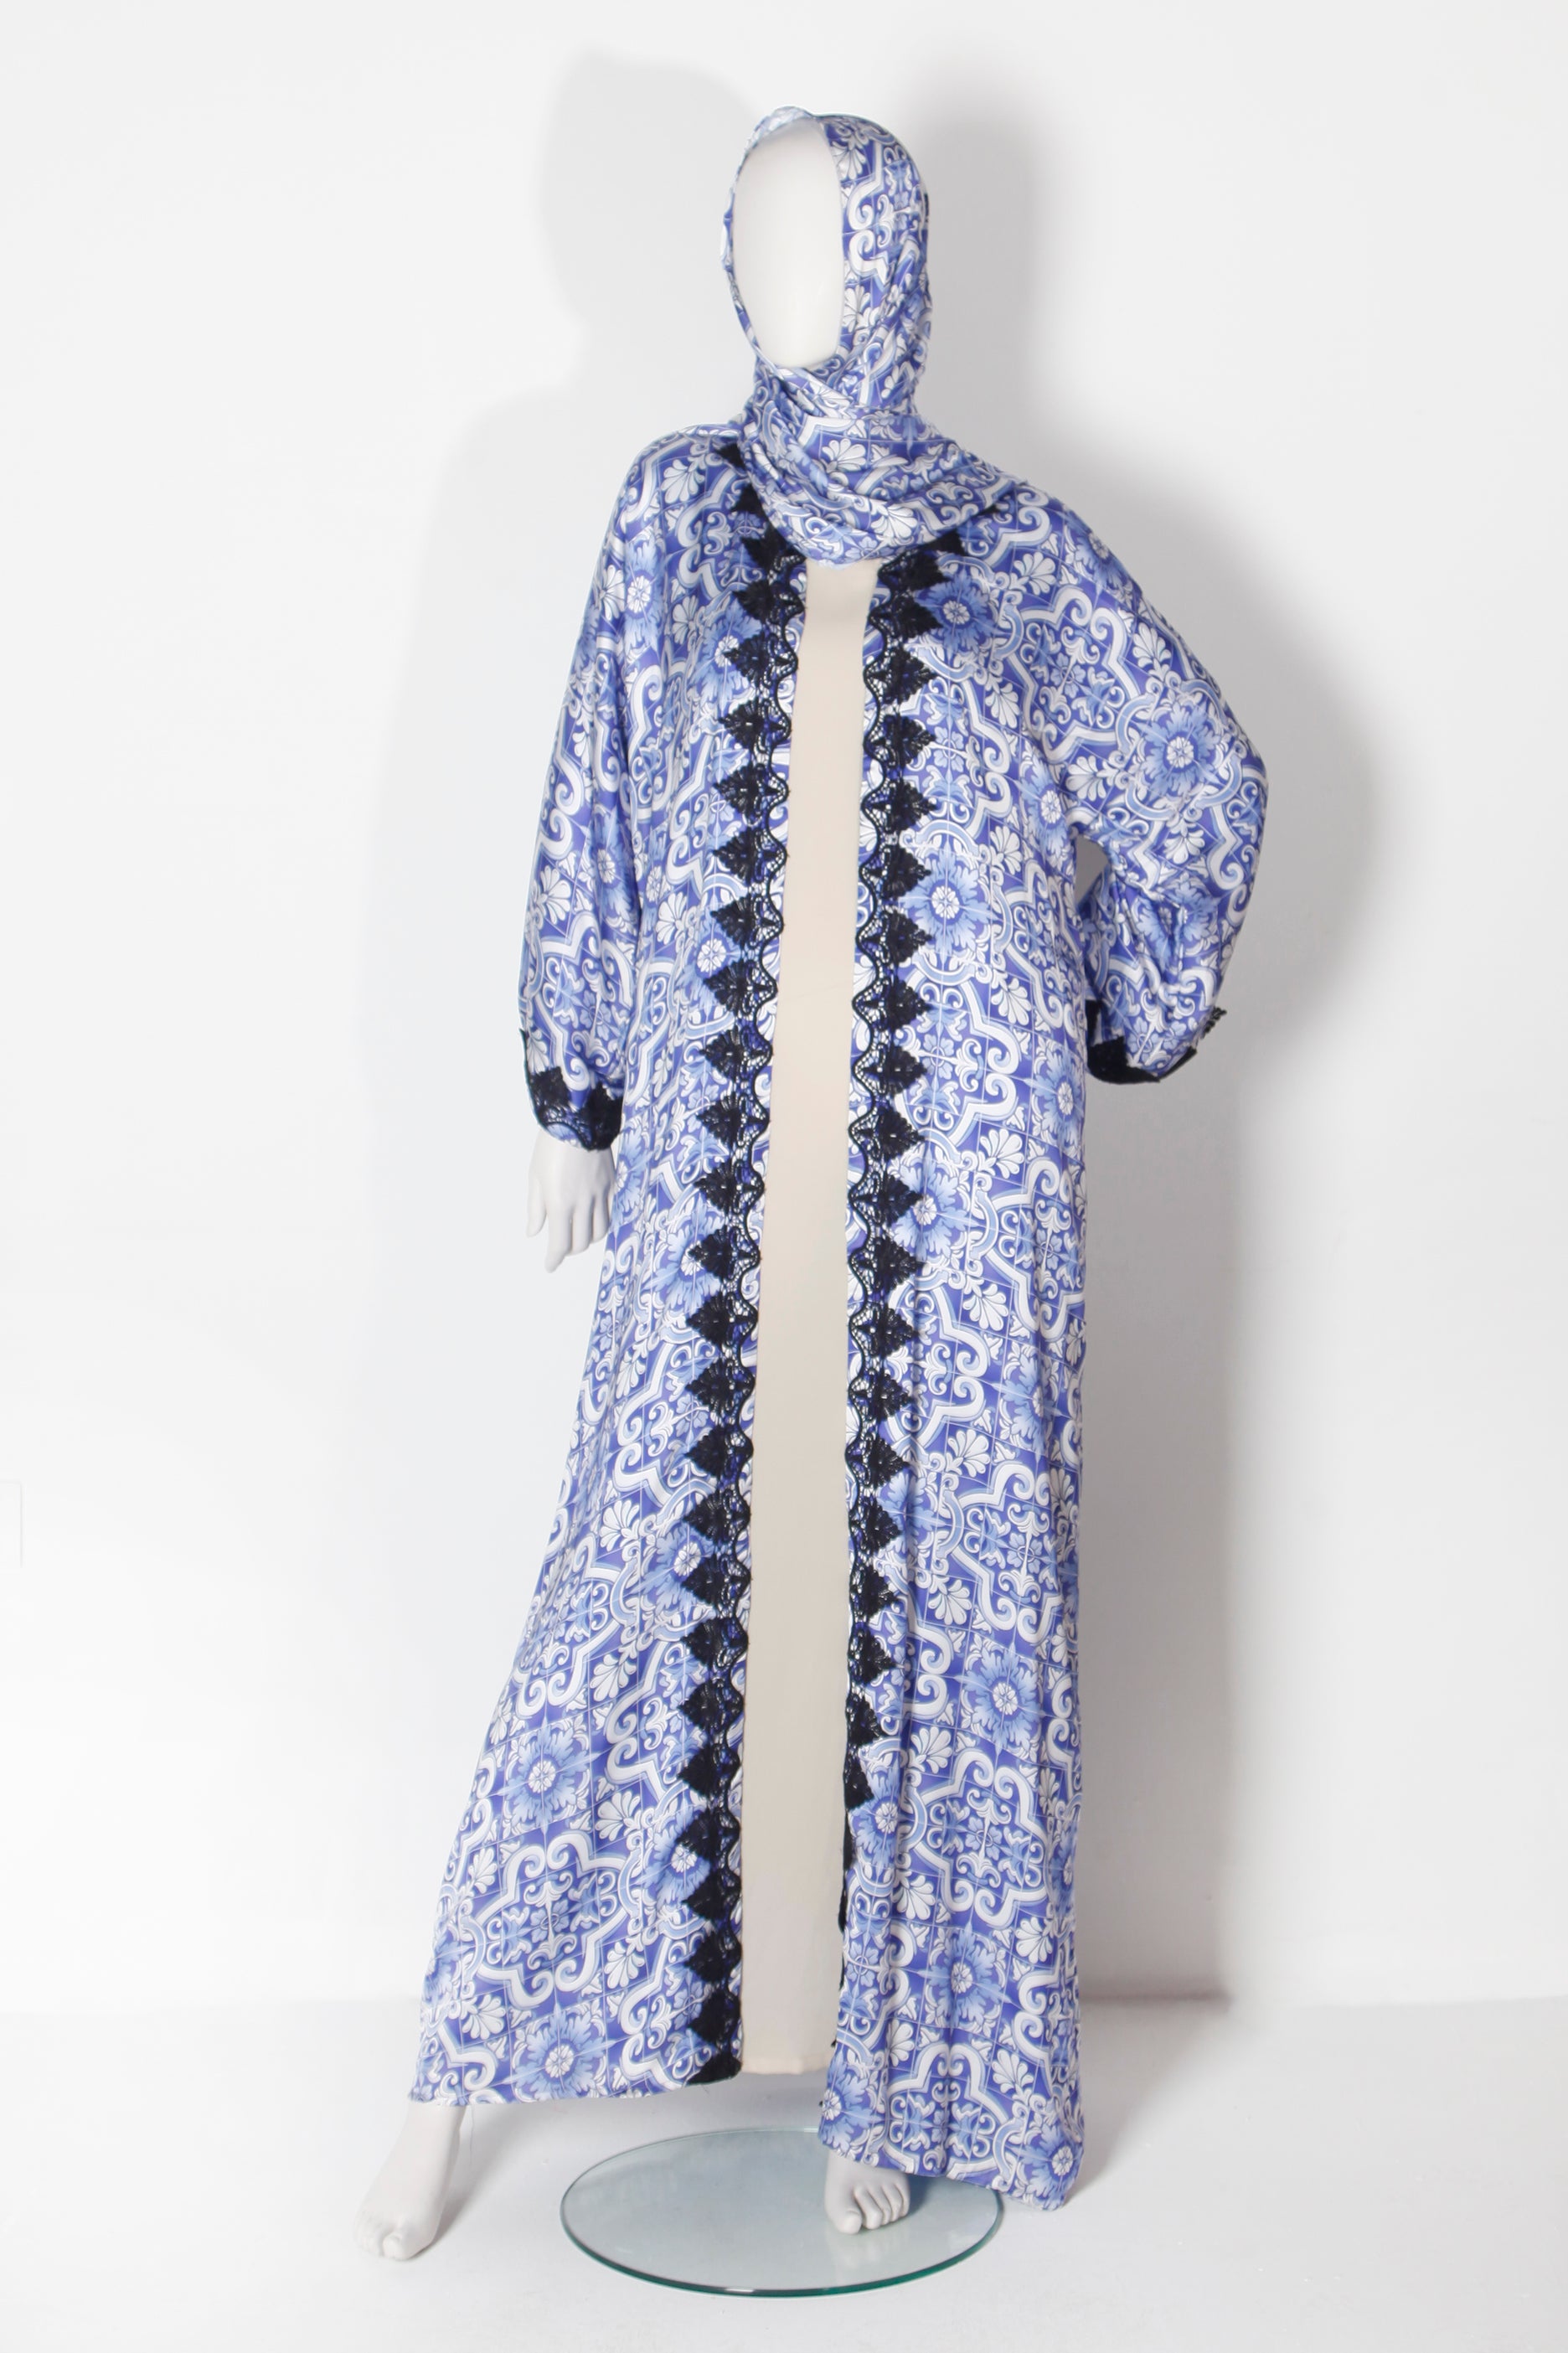 Blue printed abaya